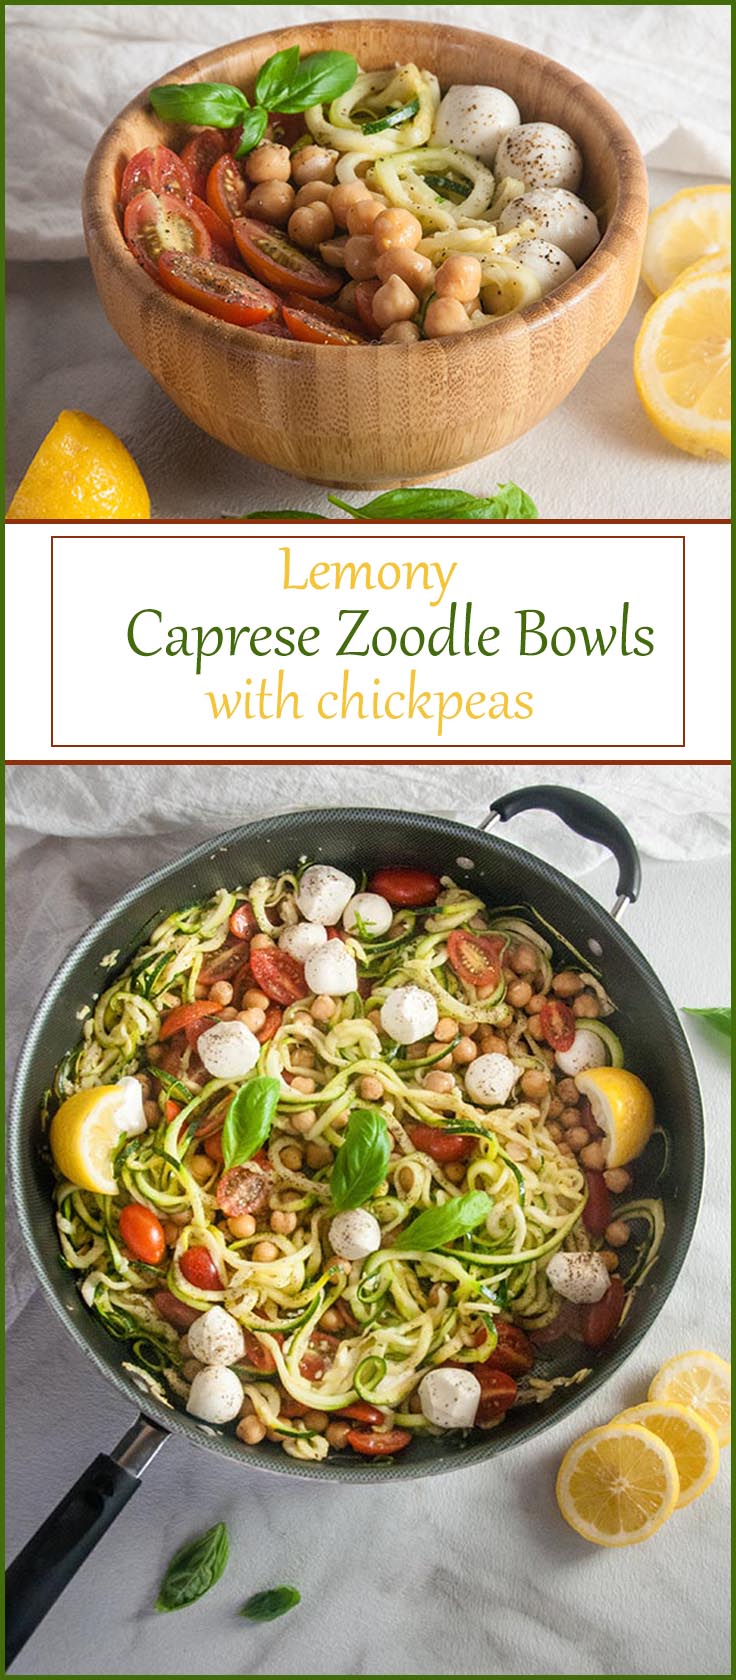 Lemony Caprese Zoodle Bowls with Chickpeas from www.SeasonedSprinkles.com